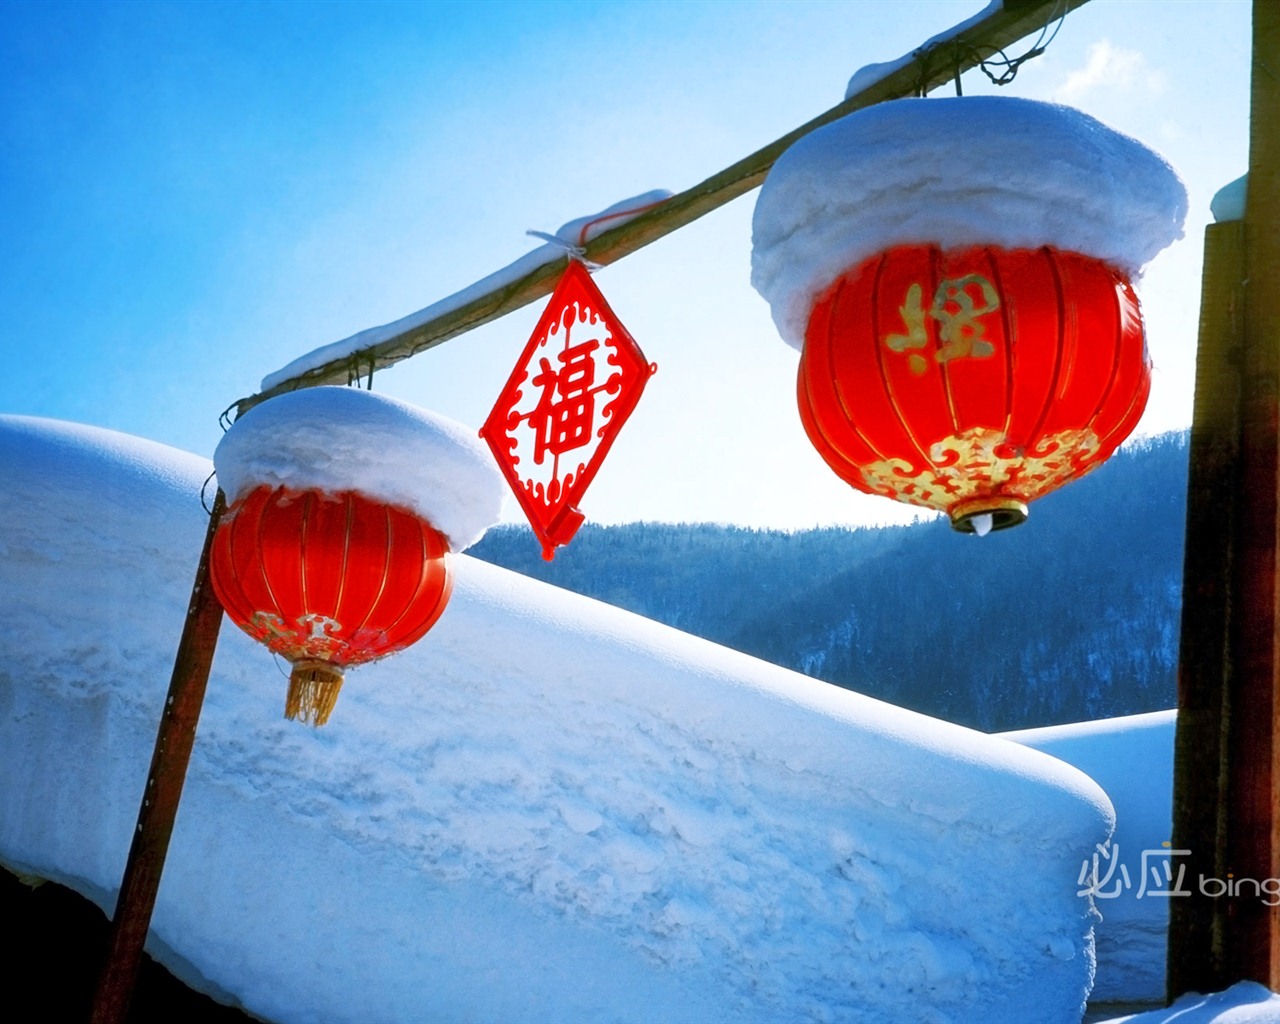 Best of Wallpapers Bing: la Chine #3 - 1280x1024